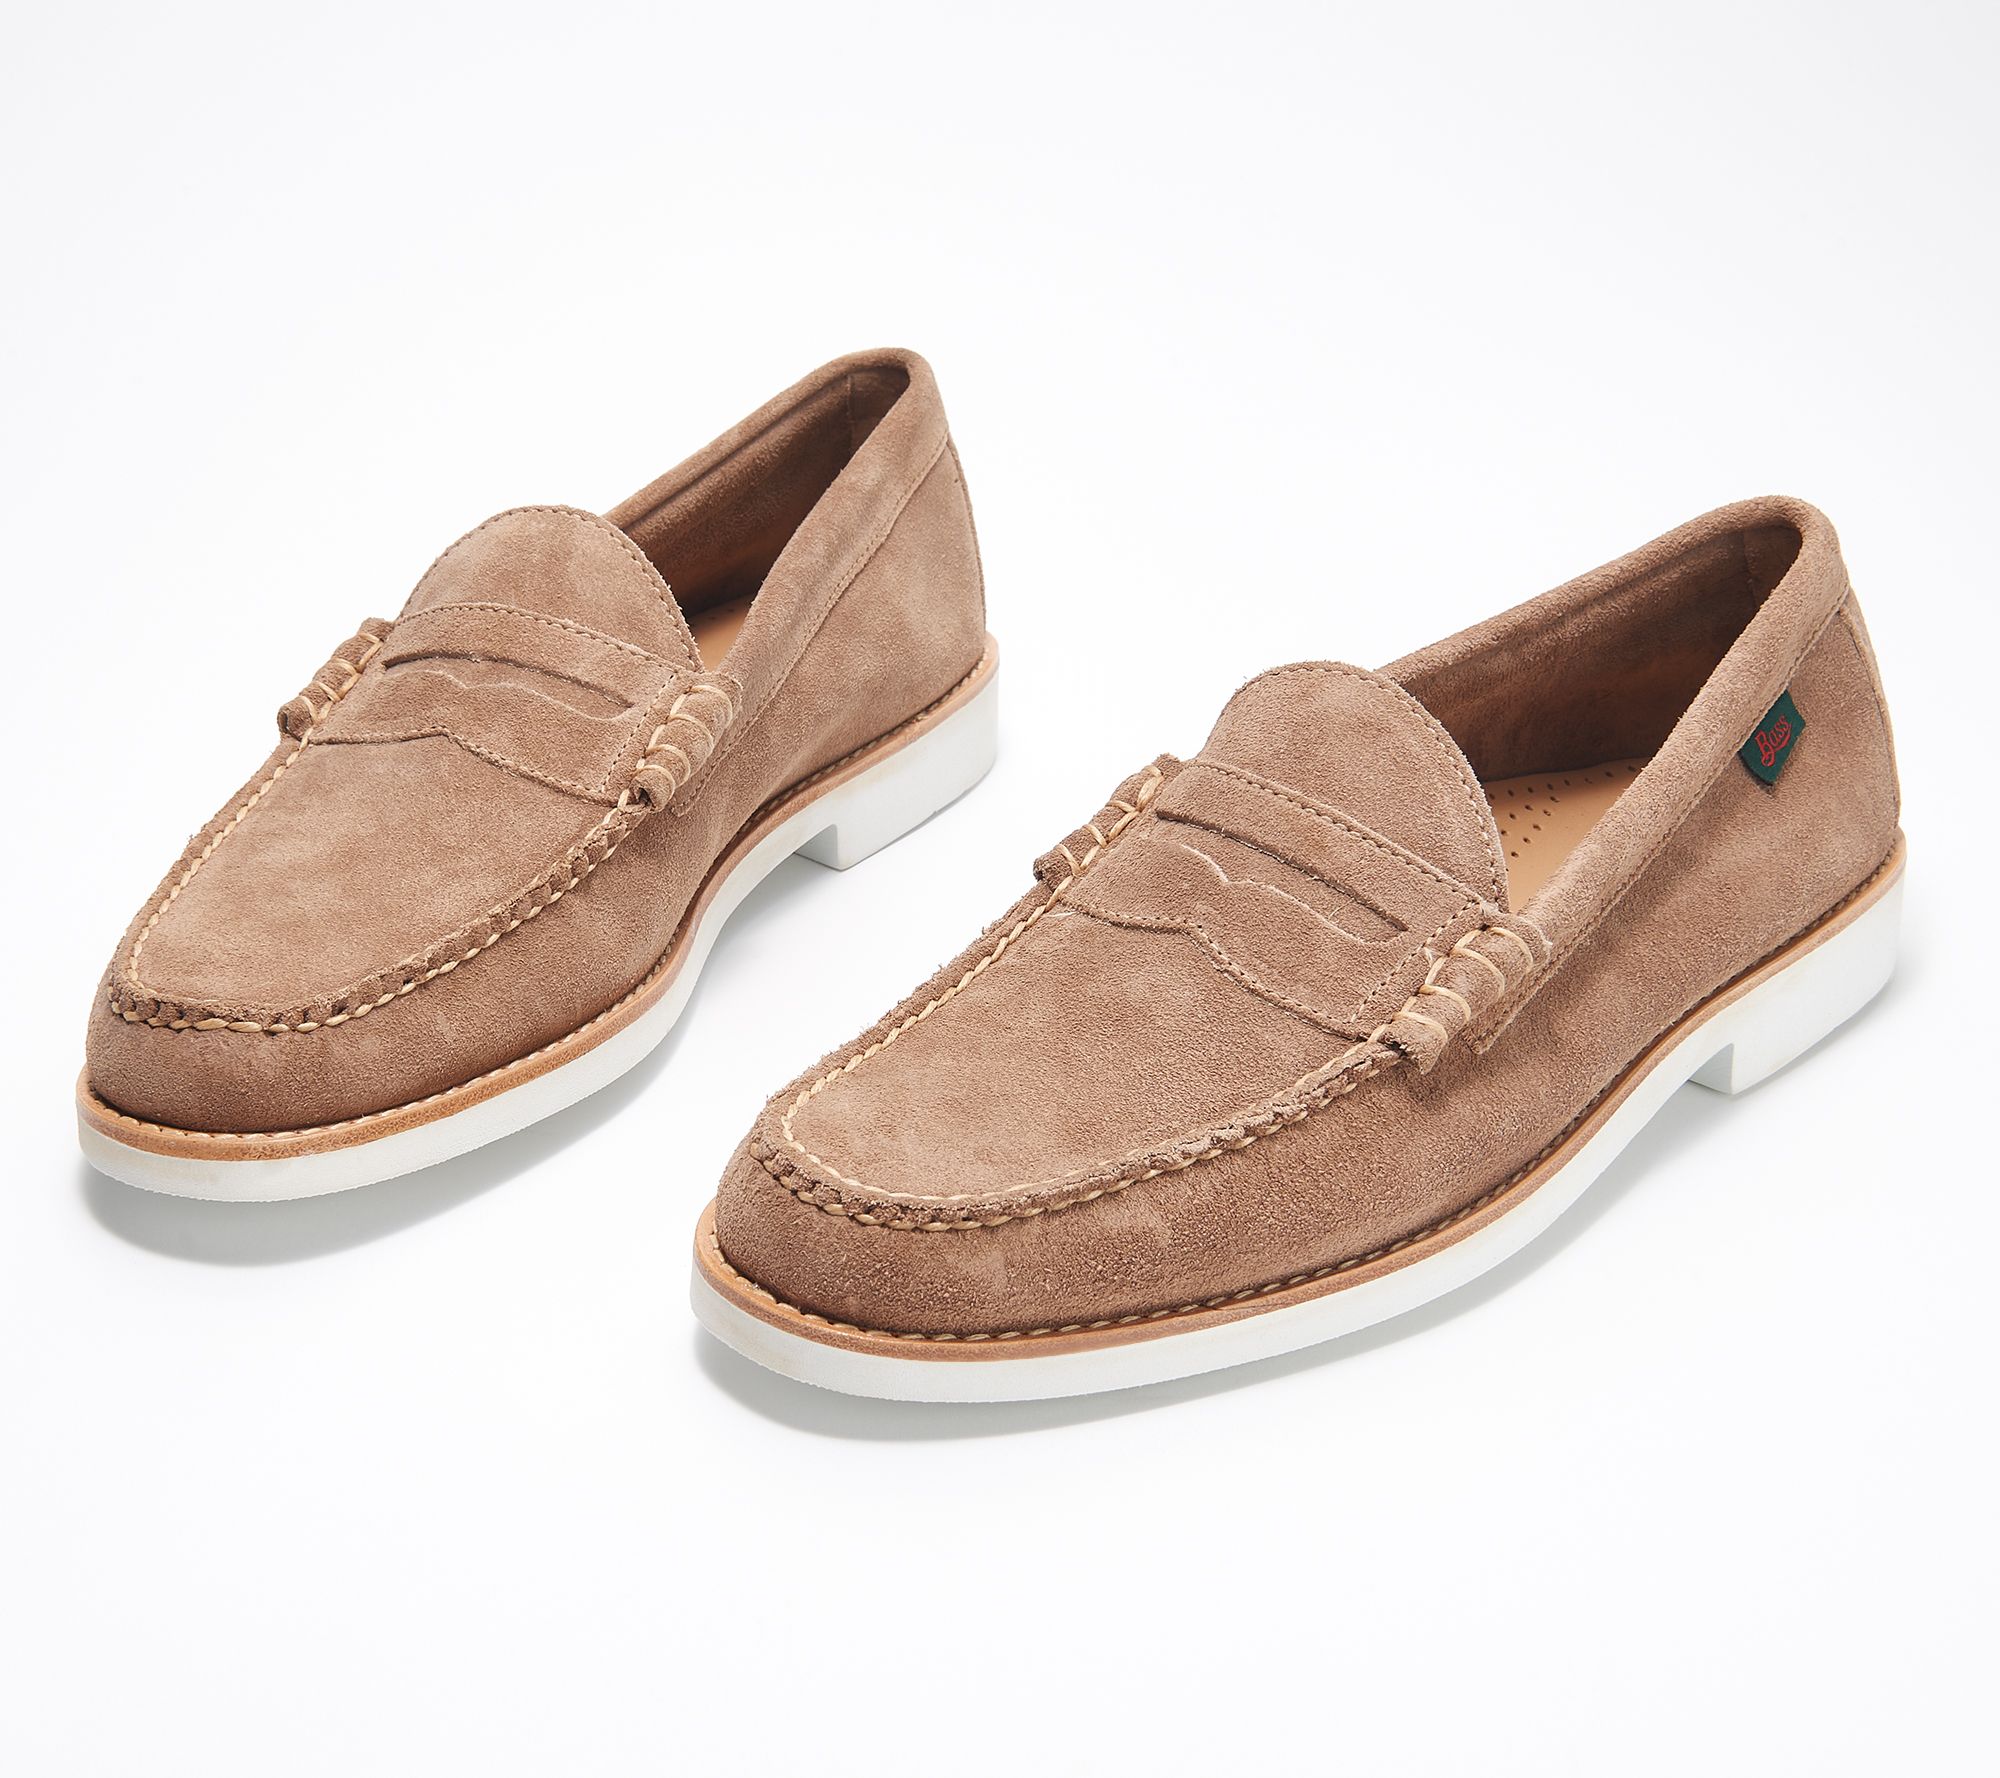 G.H. Bass Men's Hampton Leather Boat Shoes | Dillard's